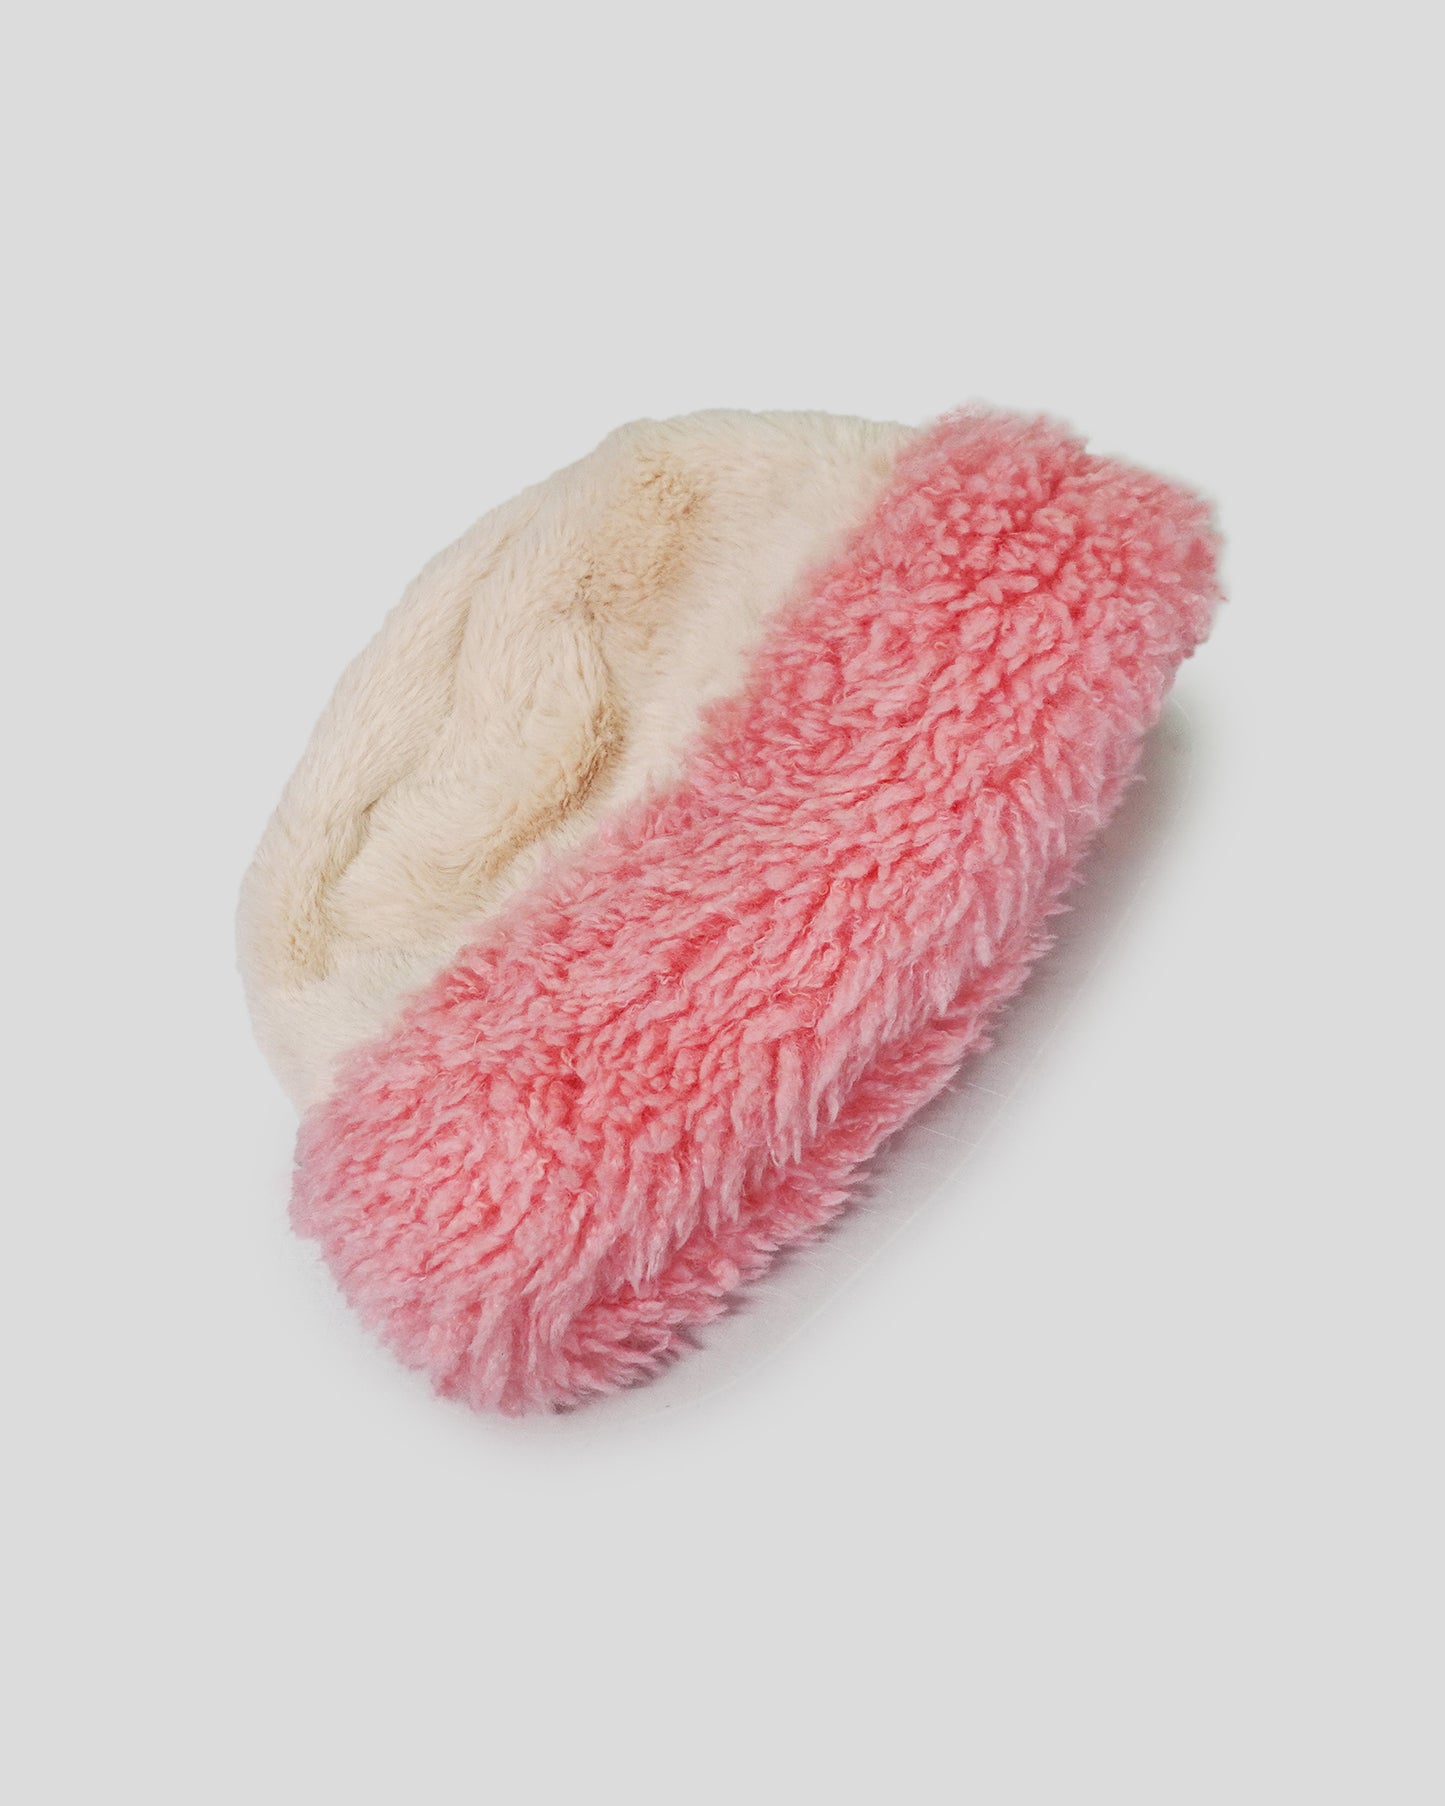 Colin Locascio - Ivory Pink Libby Hat